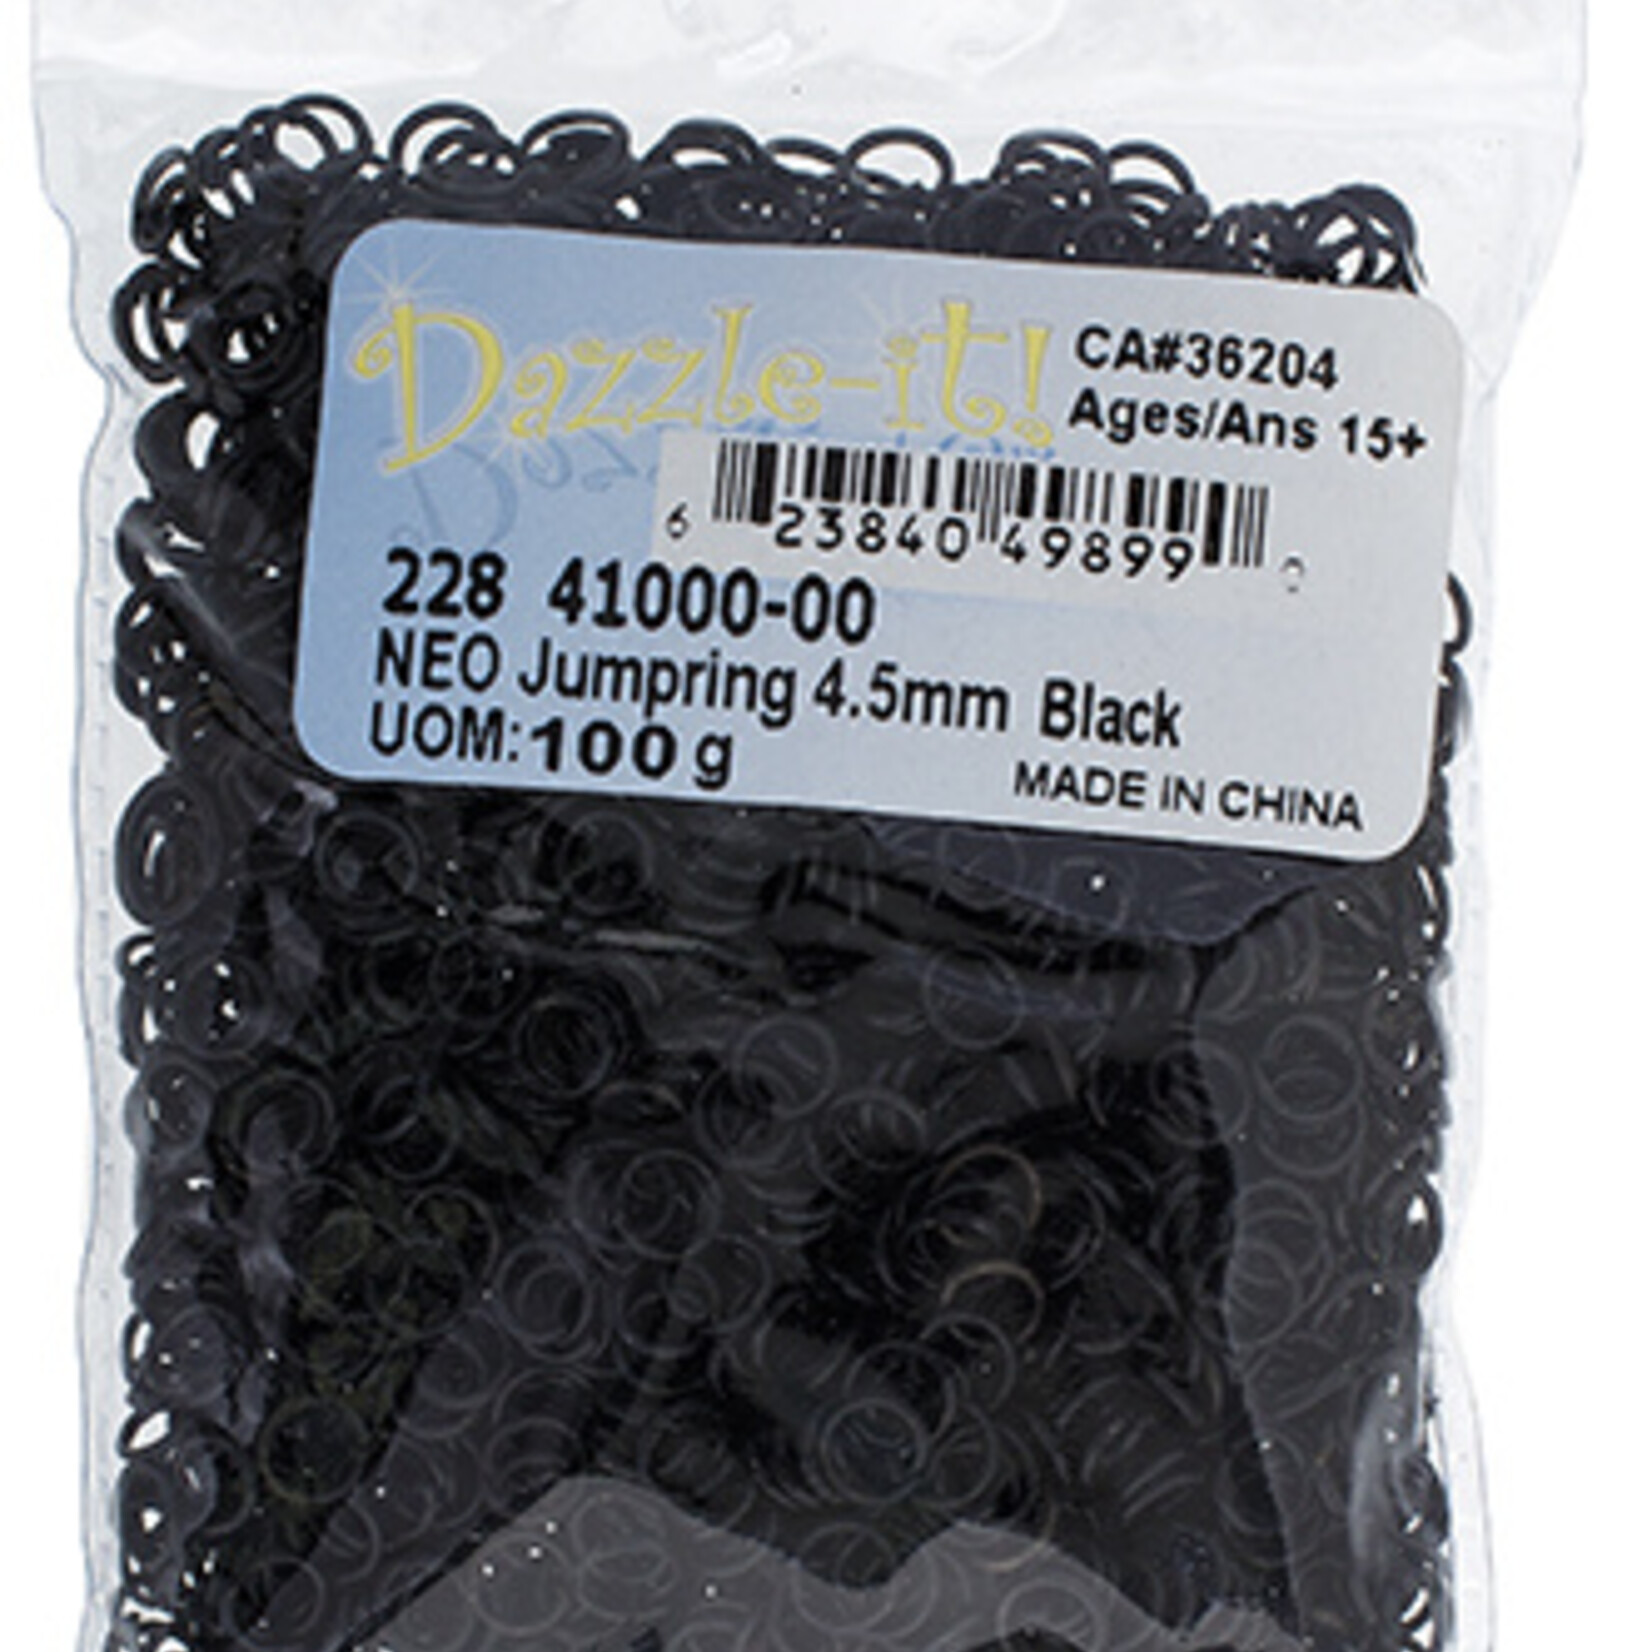 NEO Jump Rings - 4.5mm Black 21ga 100 grams (280 pieces)